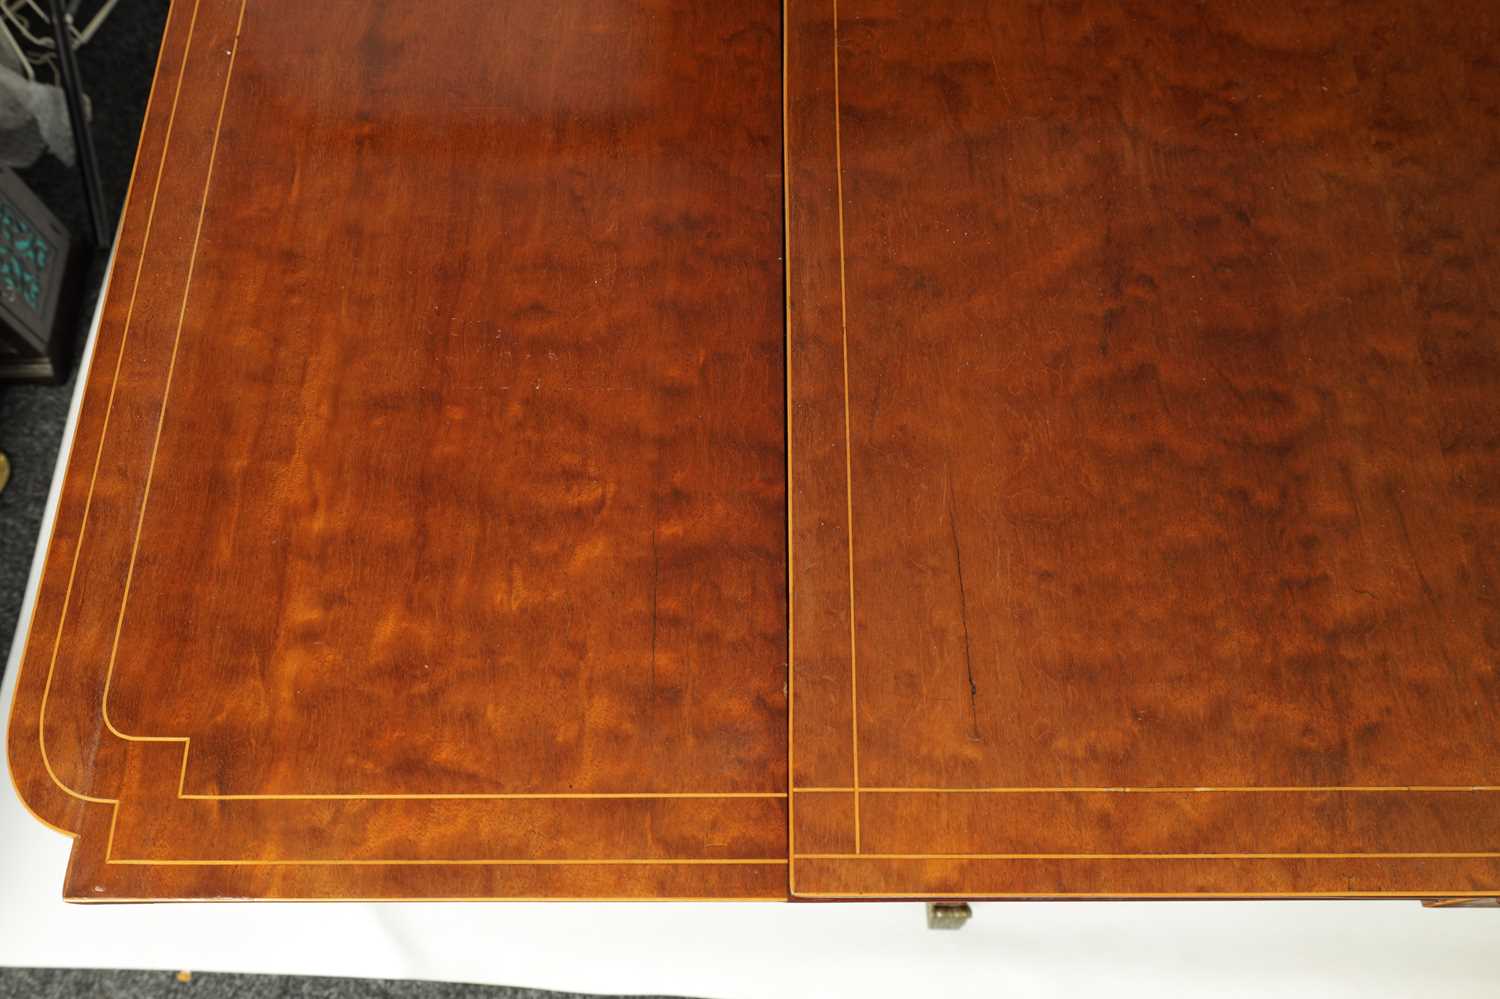 AN UNUSUAL REGENCY PLUM PUDDING BOX-WOOD INLAID MAHOGANY SOFA TABLE - Image 5 of 8